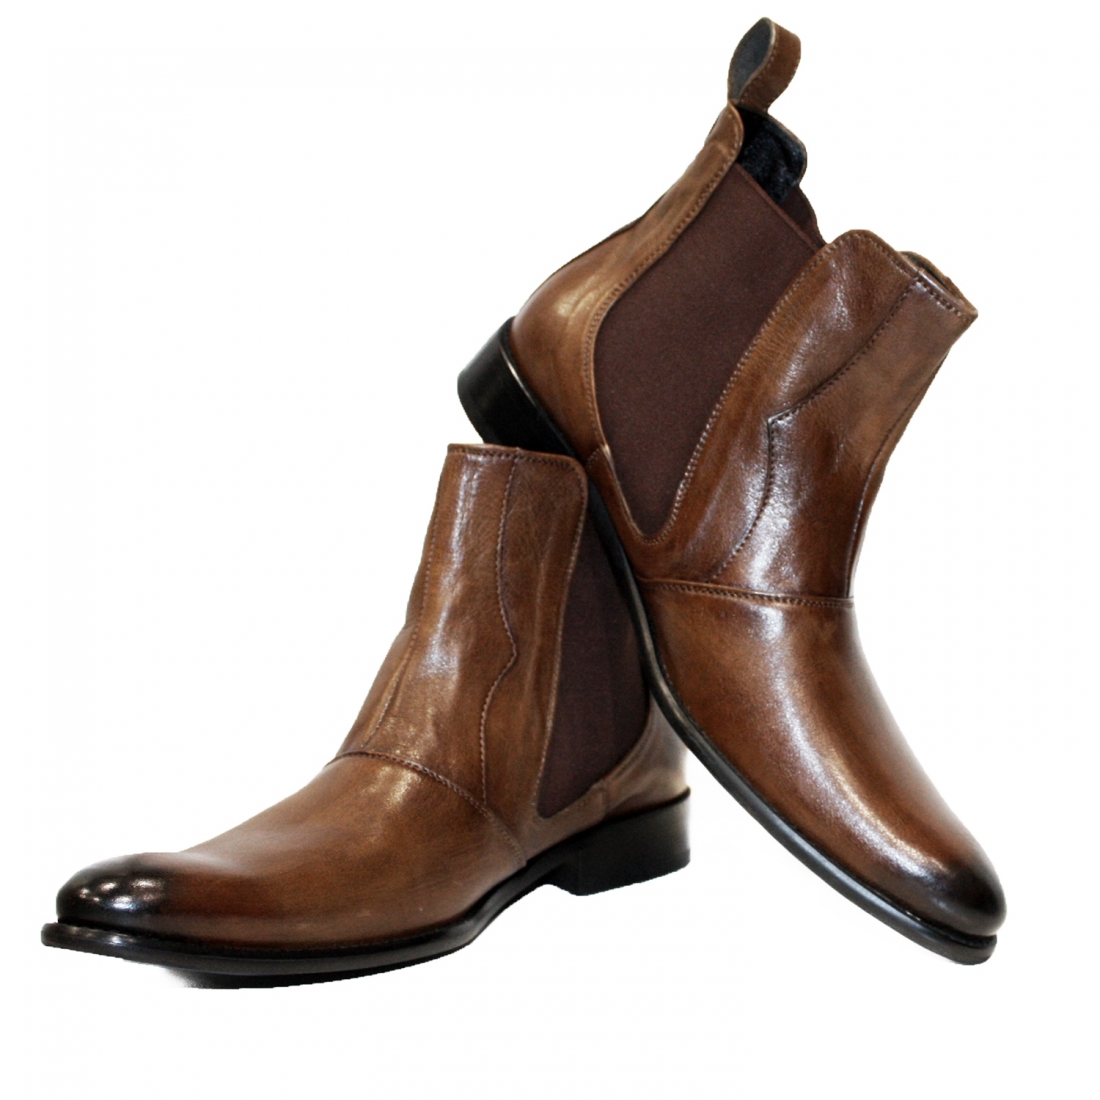 Modello Maroon - Chelsea Botas - Handmade Colorful Italian Leather Shoes